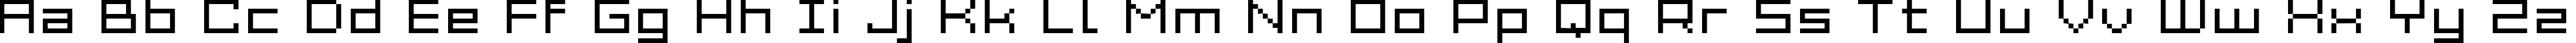 Пример написания английского алфавита шрифтом Grixel Acme 7 Wide Xtnd